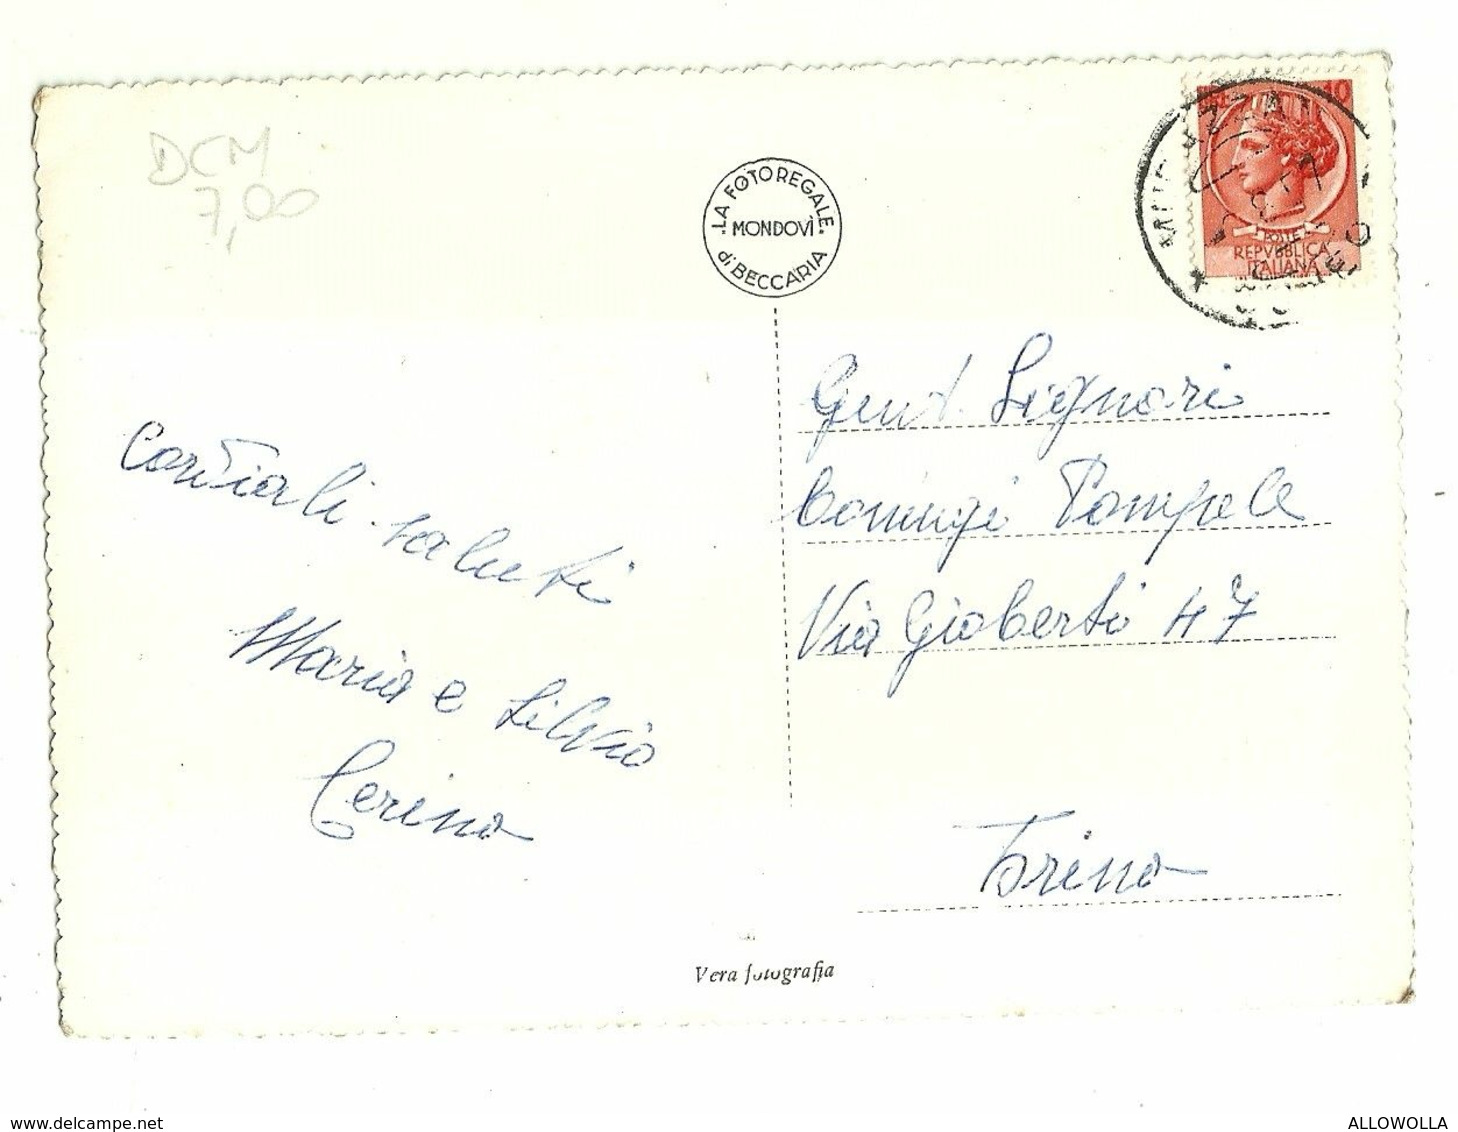 9131 "SALUTI DA MURAZZANO " 3 VEDUTE- CART. POST.  ORIG. SPED.1957 - Souvenir De...